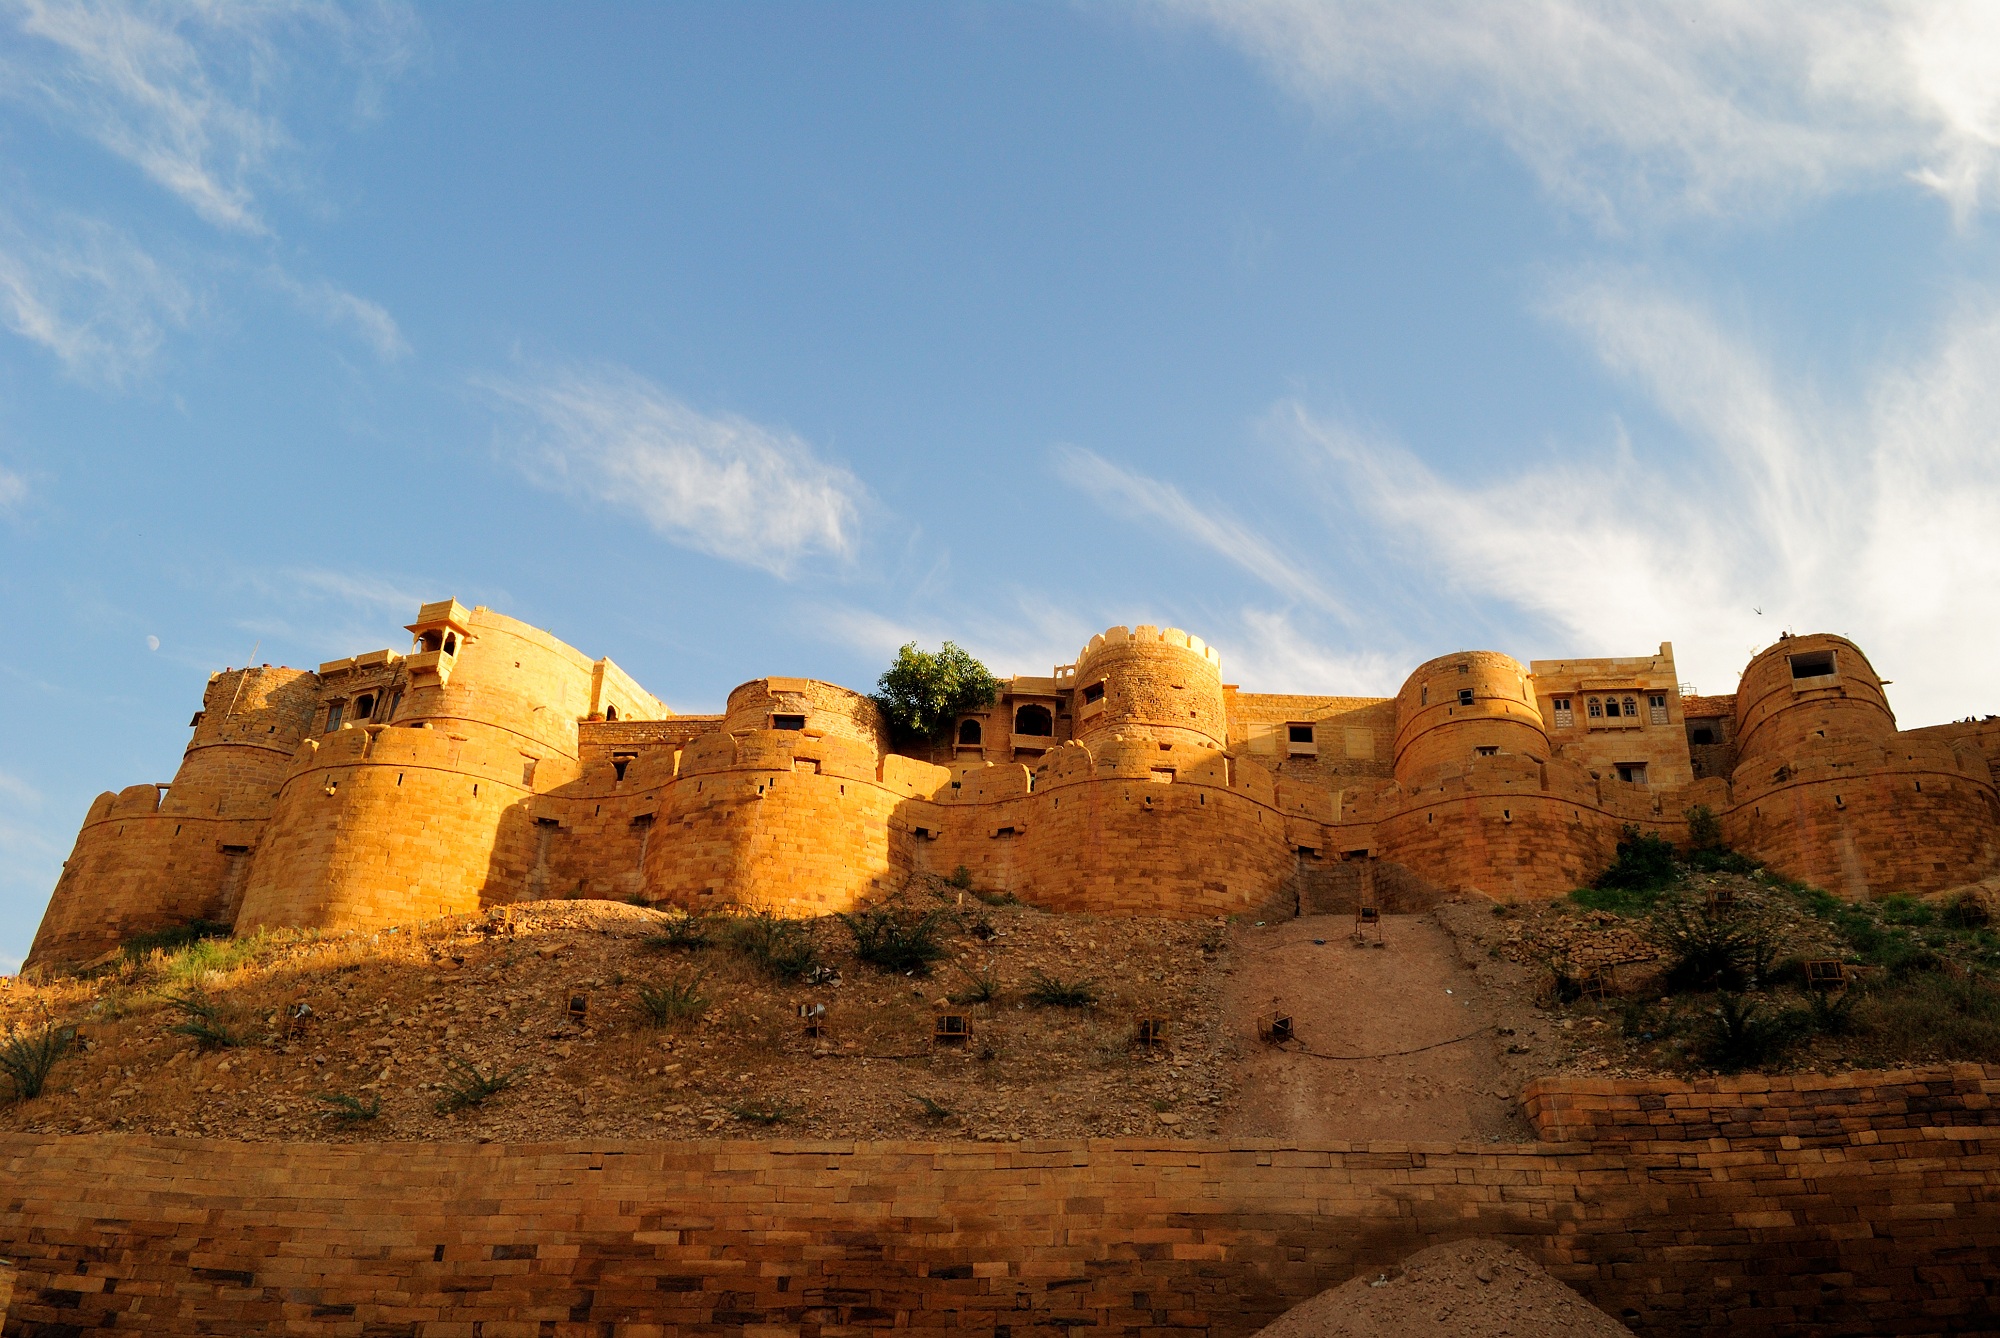 Jaisalmer Fort -  also known as Golden Fort